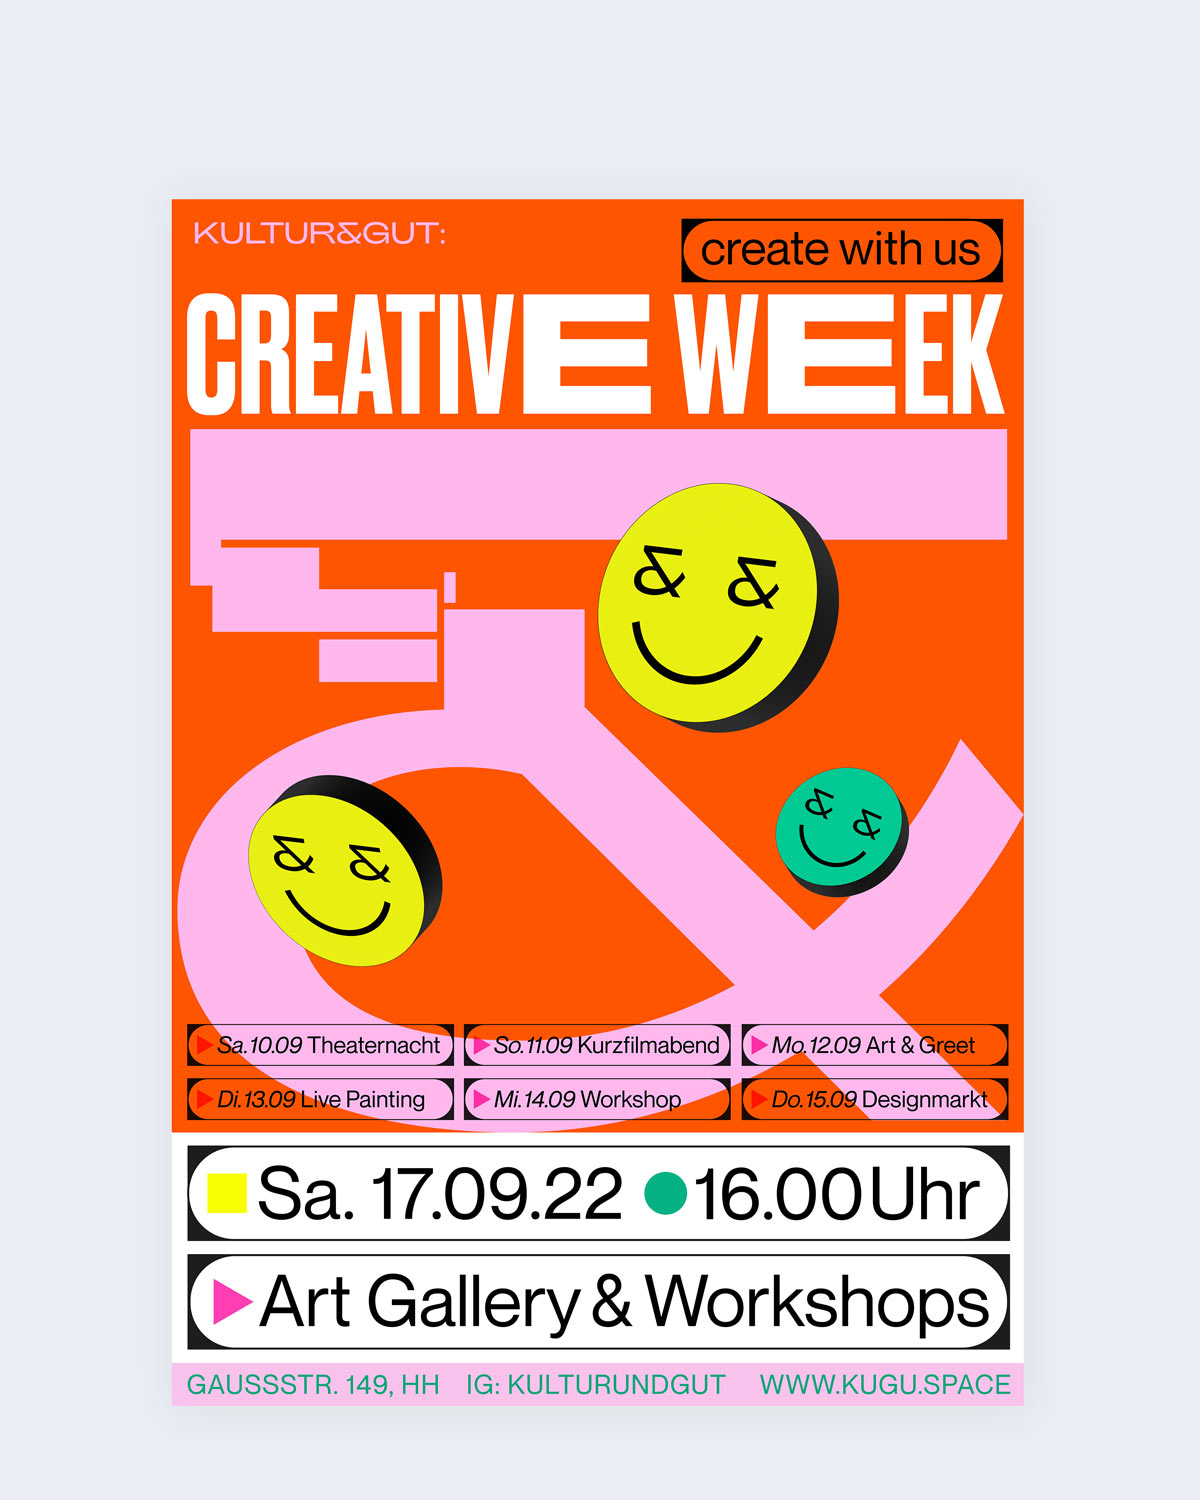 Kopie von KUGU Plakat "Creative Week" September 2022